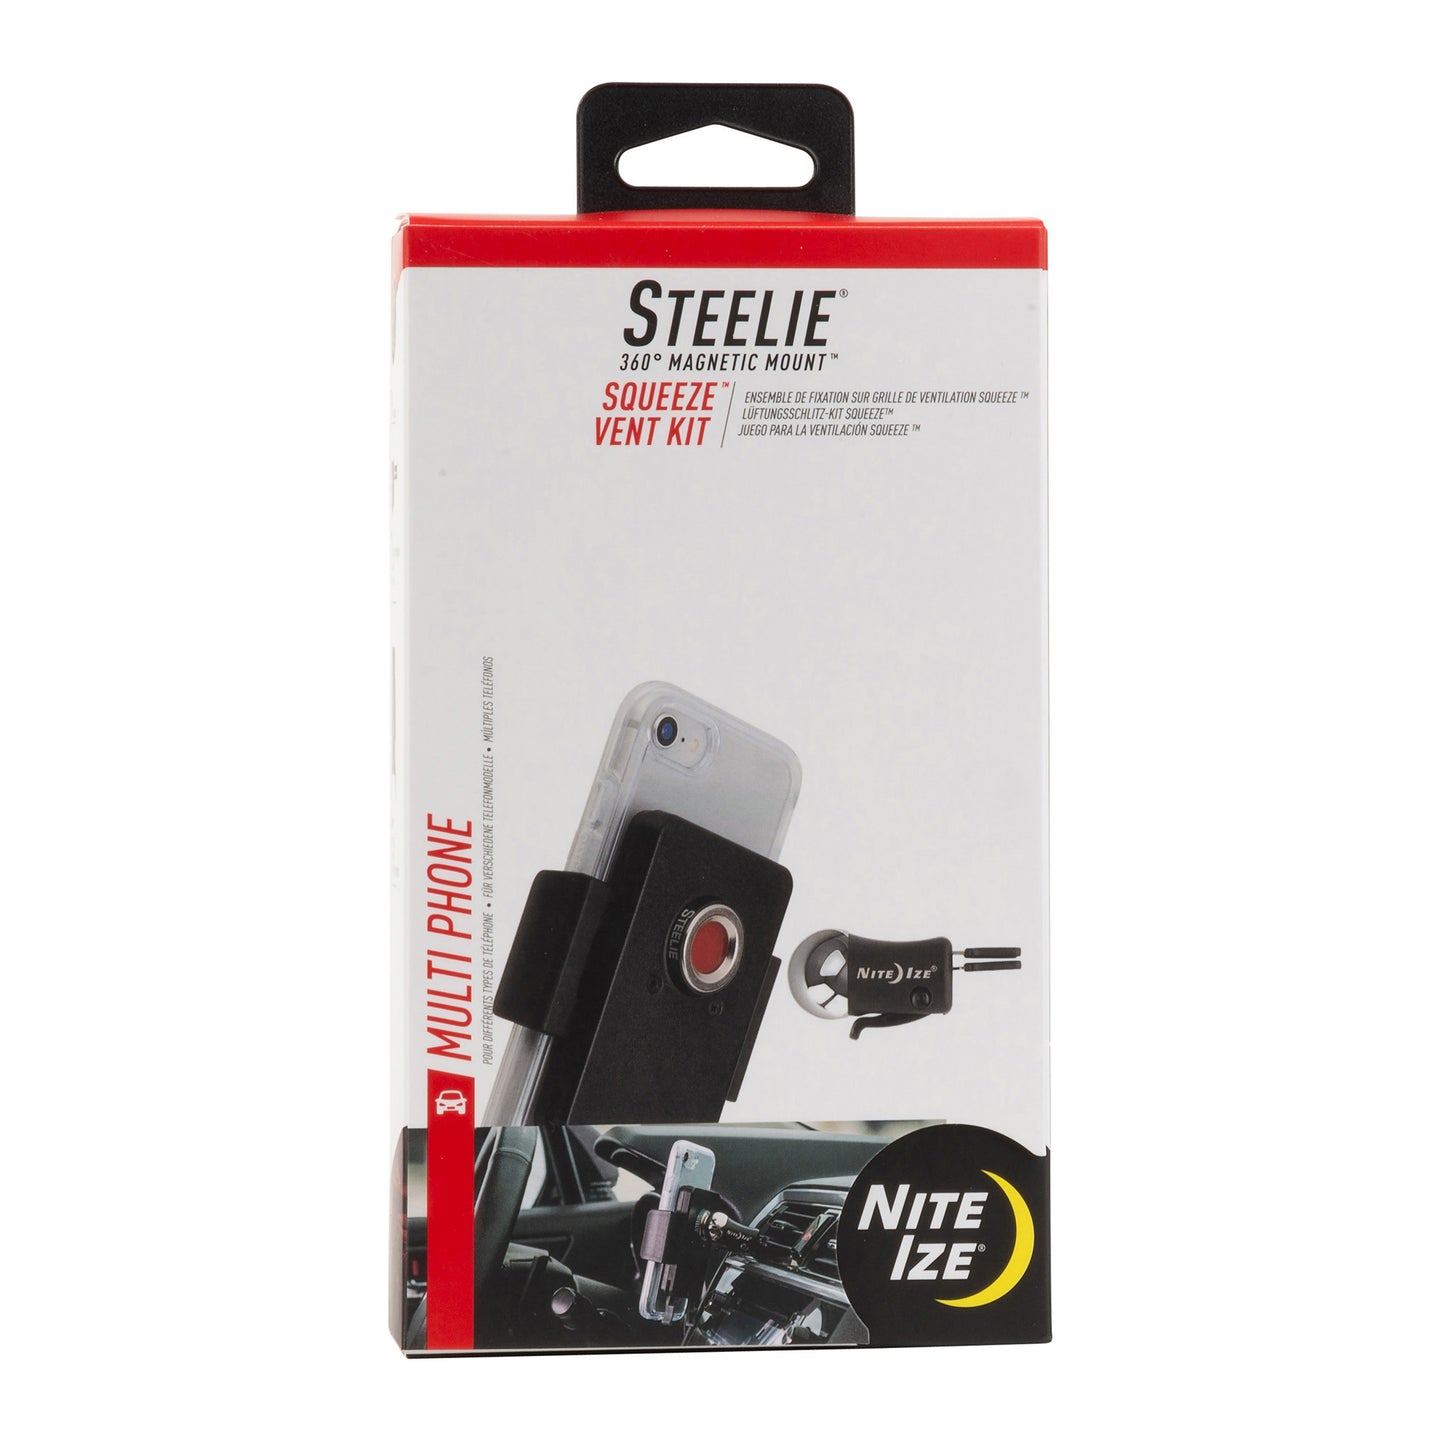 Nite Ize Steelie Squeeze Vent Kit - 15-09671